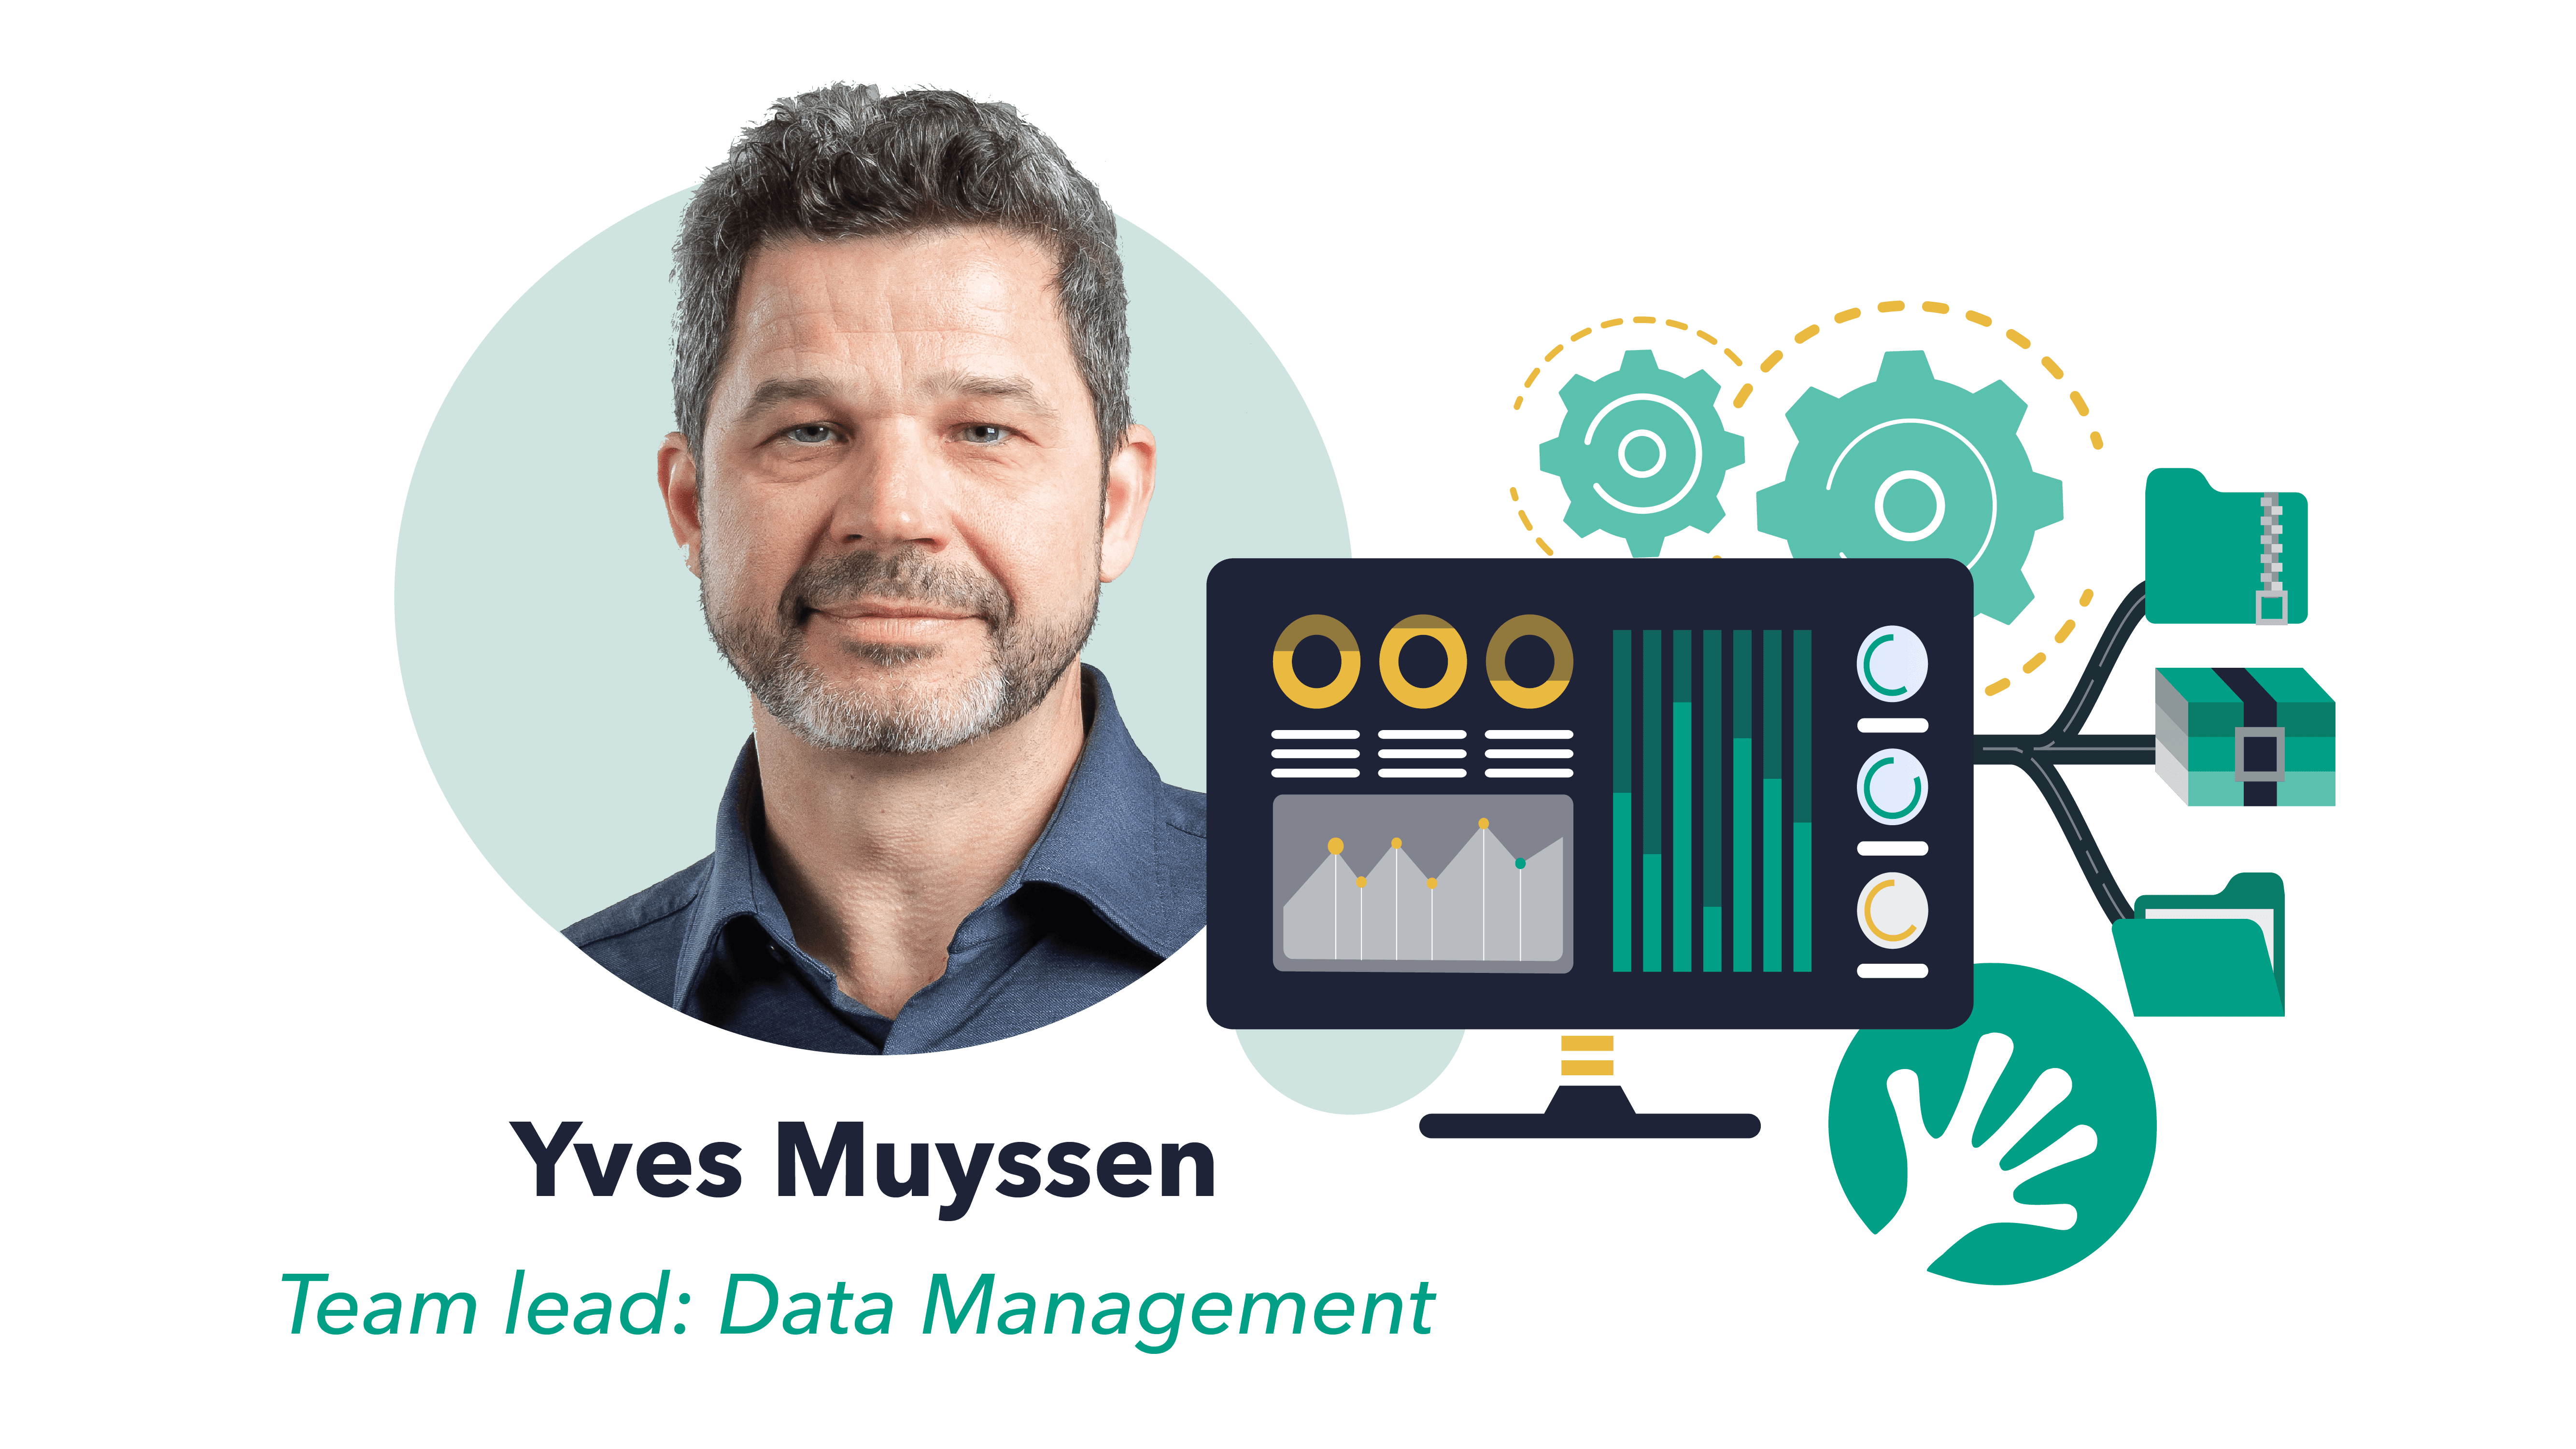 Yves Muyssen is team lead preclinical data management at BioLizard